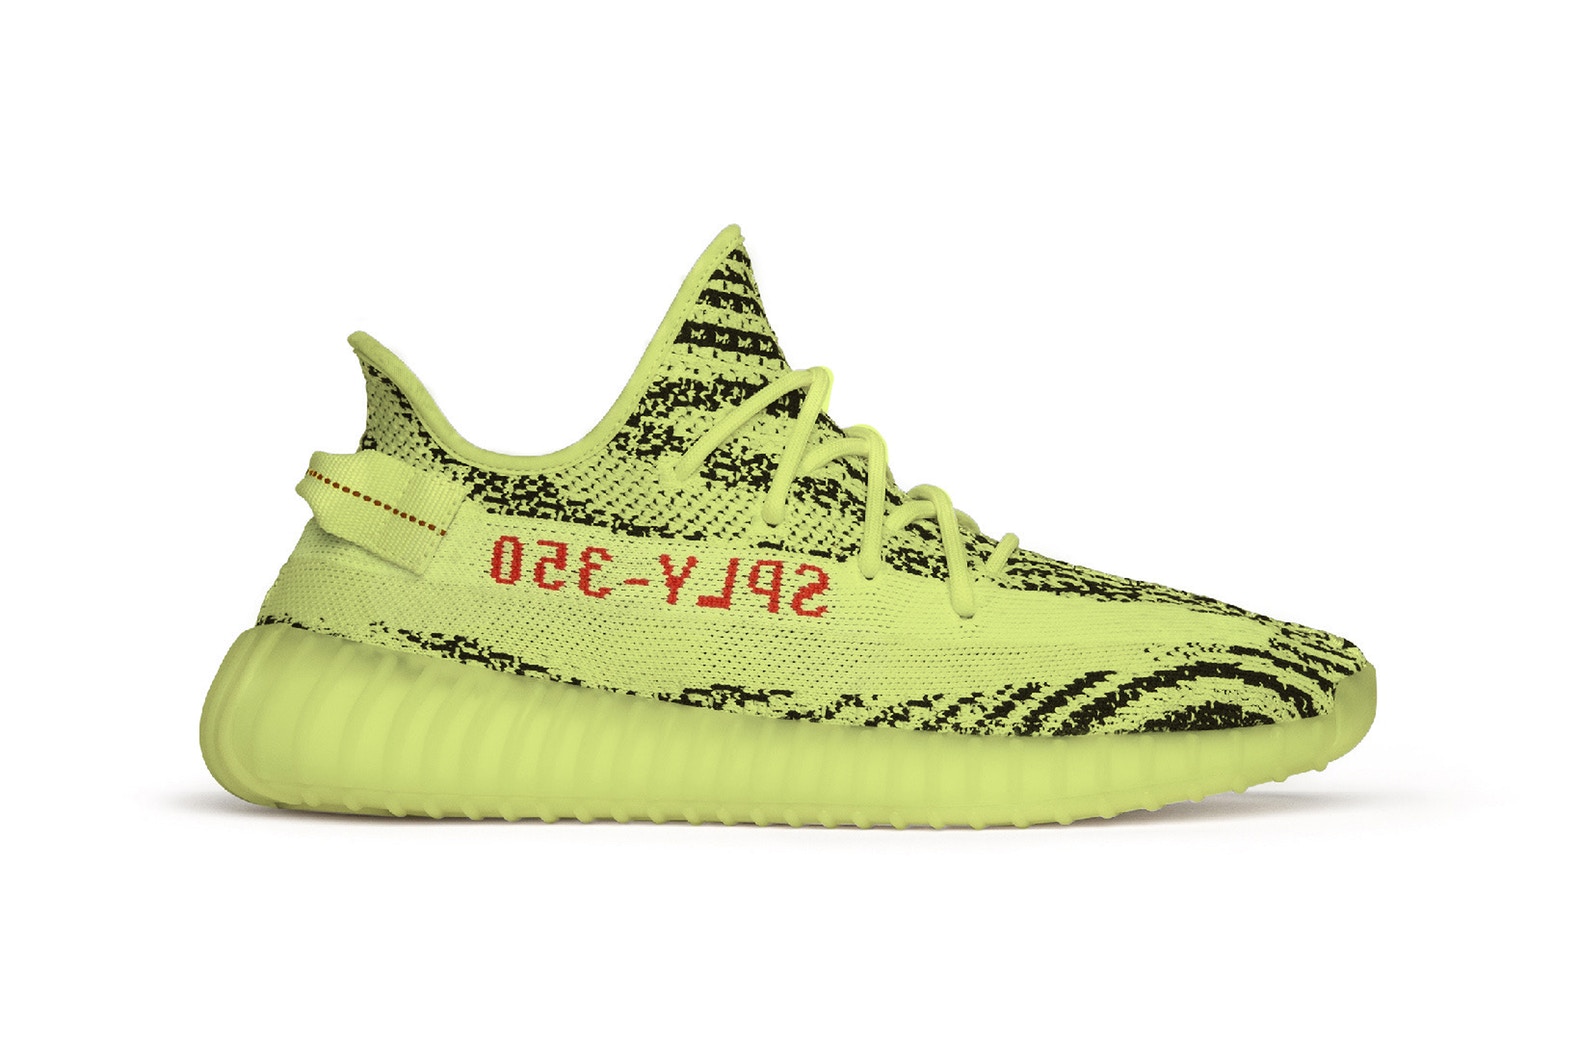 Kanye Wears The adidas YEEZY Boost 350 V2 In Unreleased ‘Semi Frozen Yellow’ Colourway